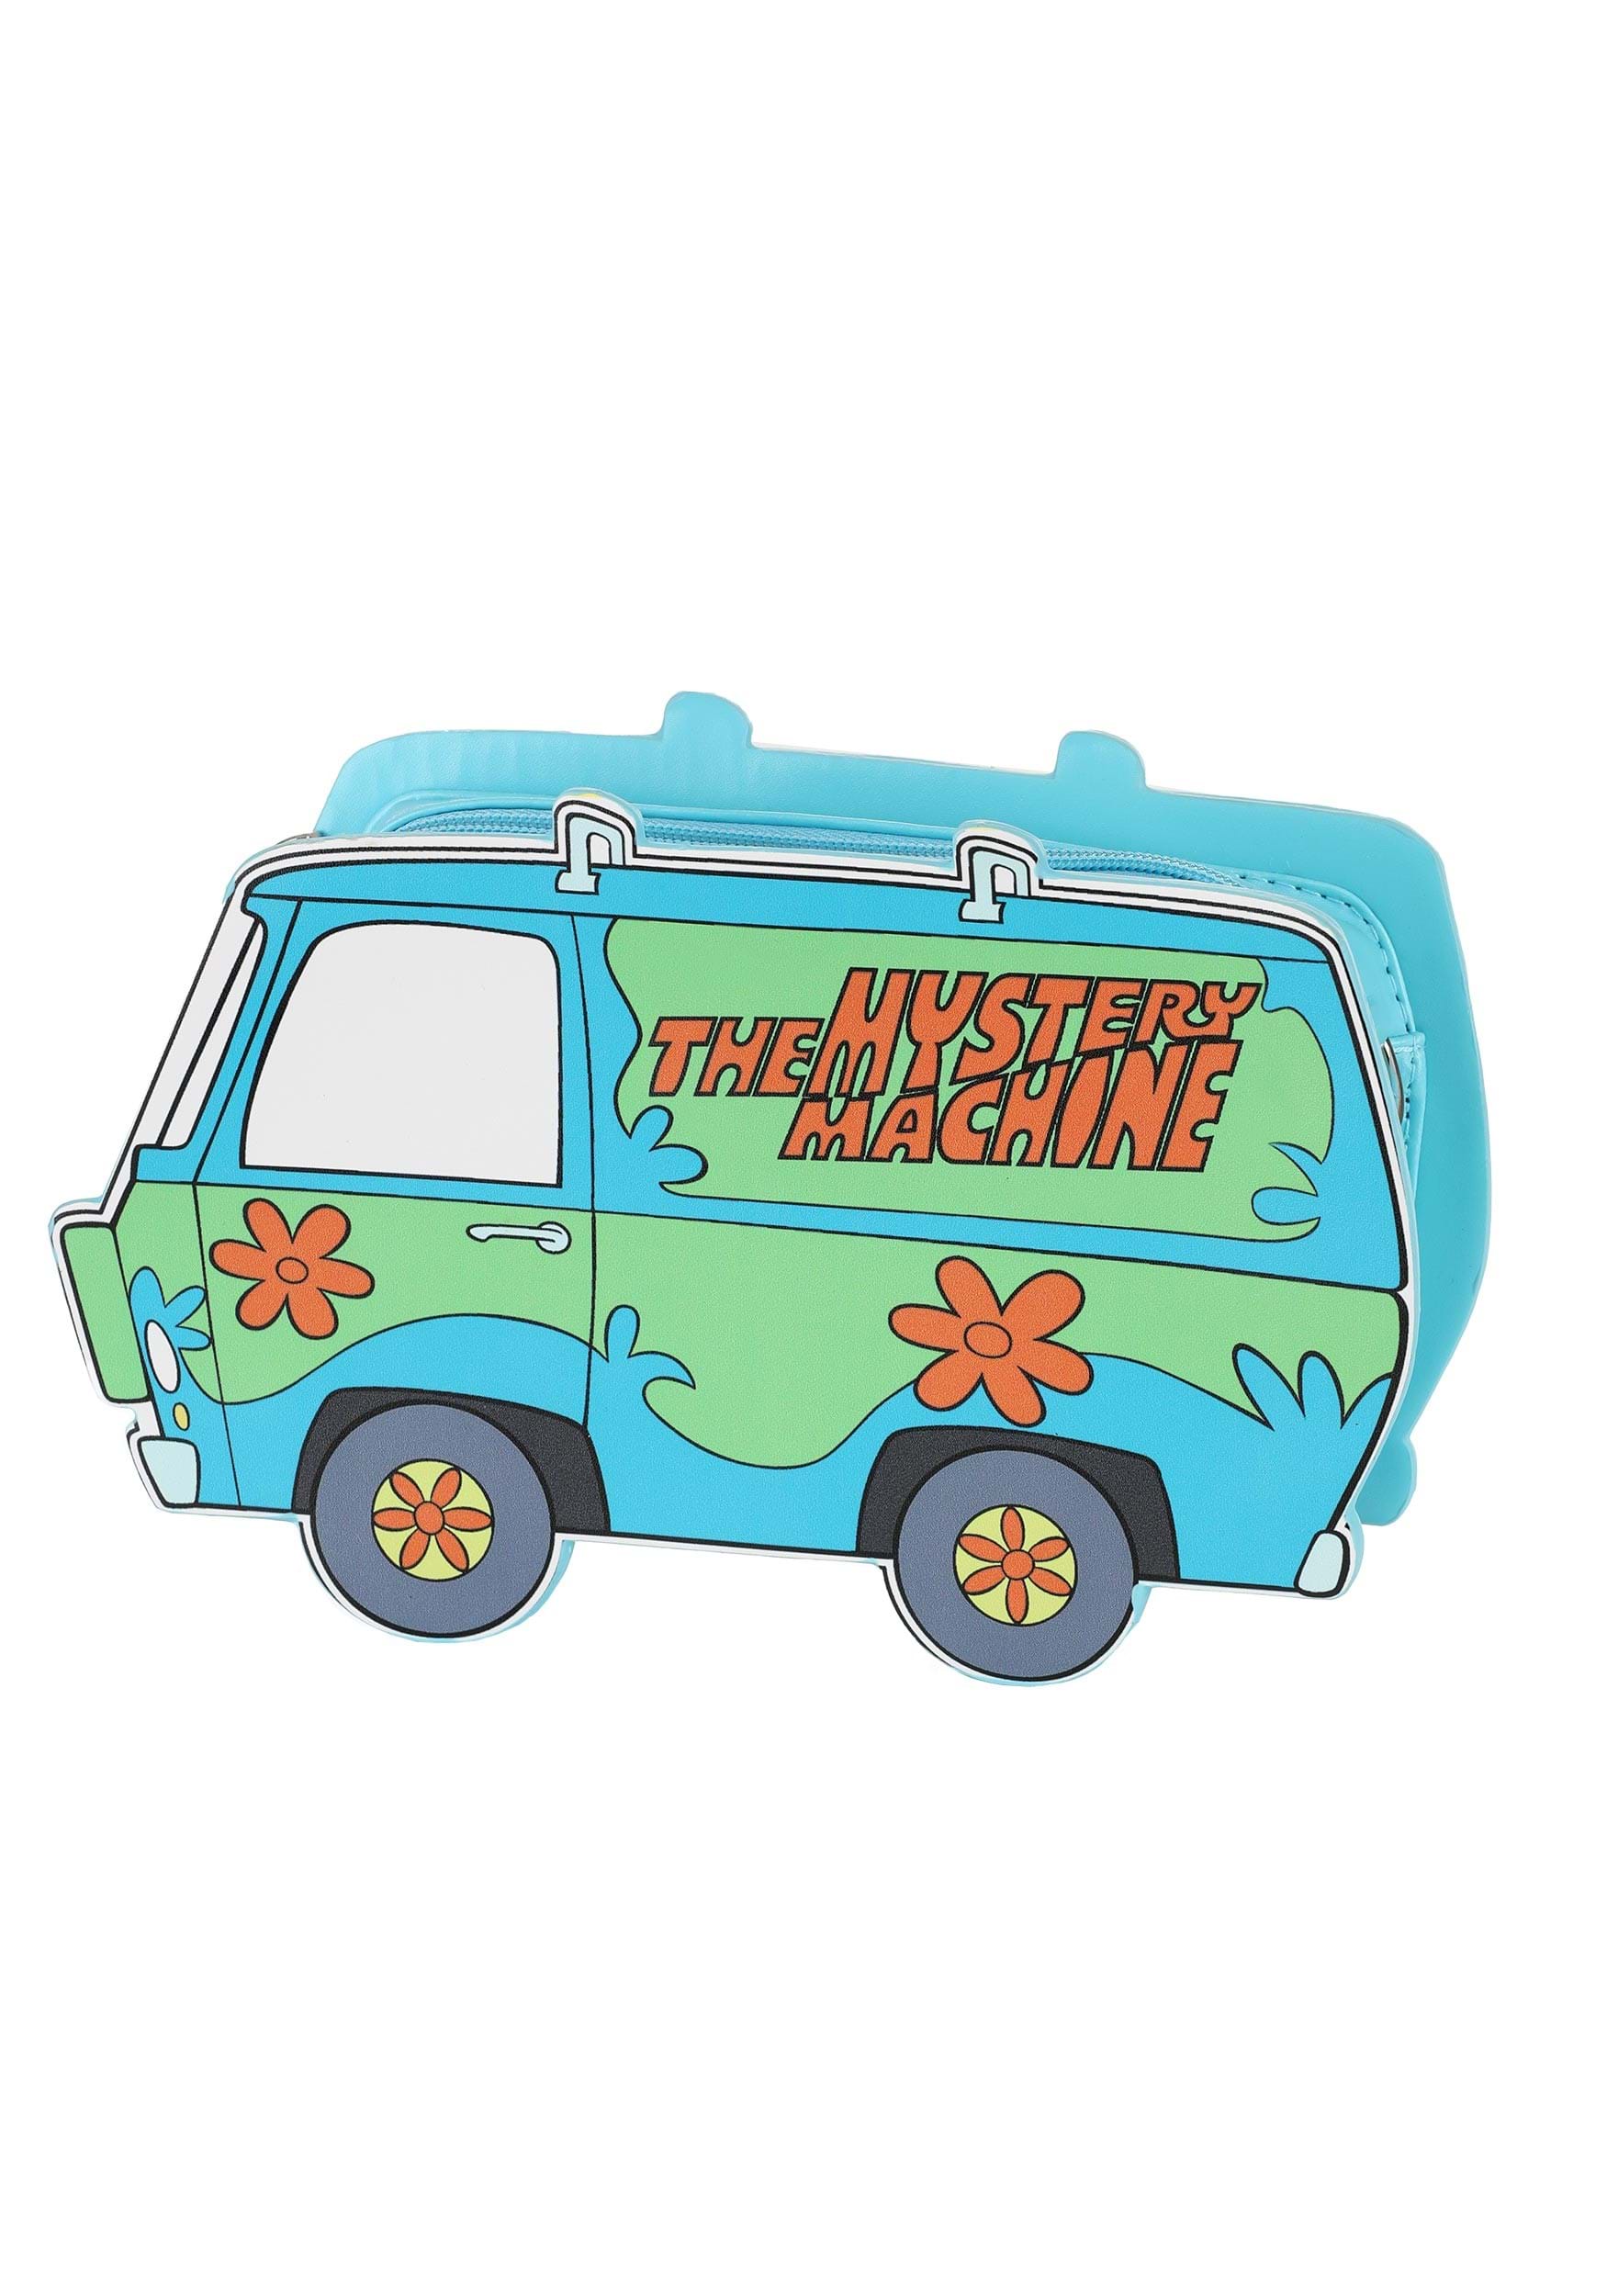 Scooby Doo Mystery Machine Crossbody Bag by Loungefly